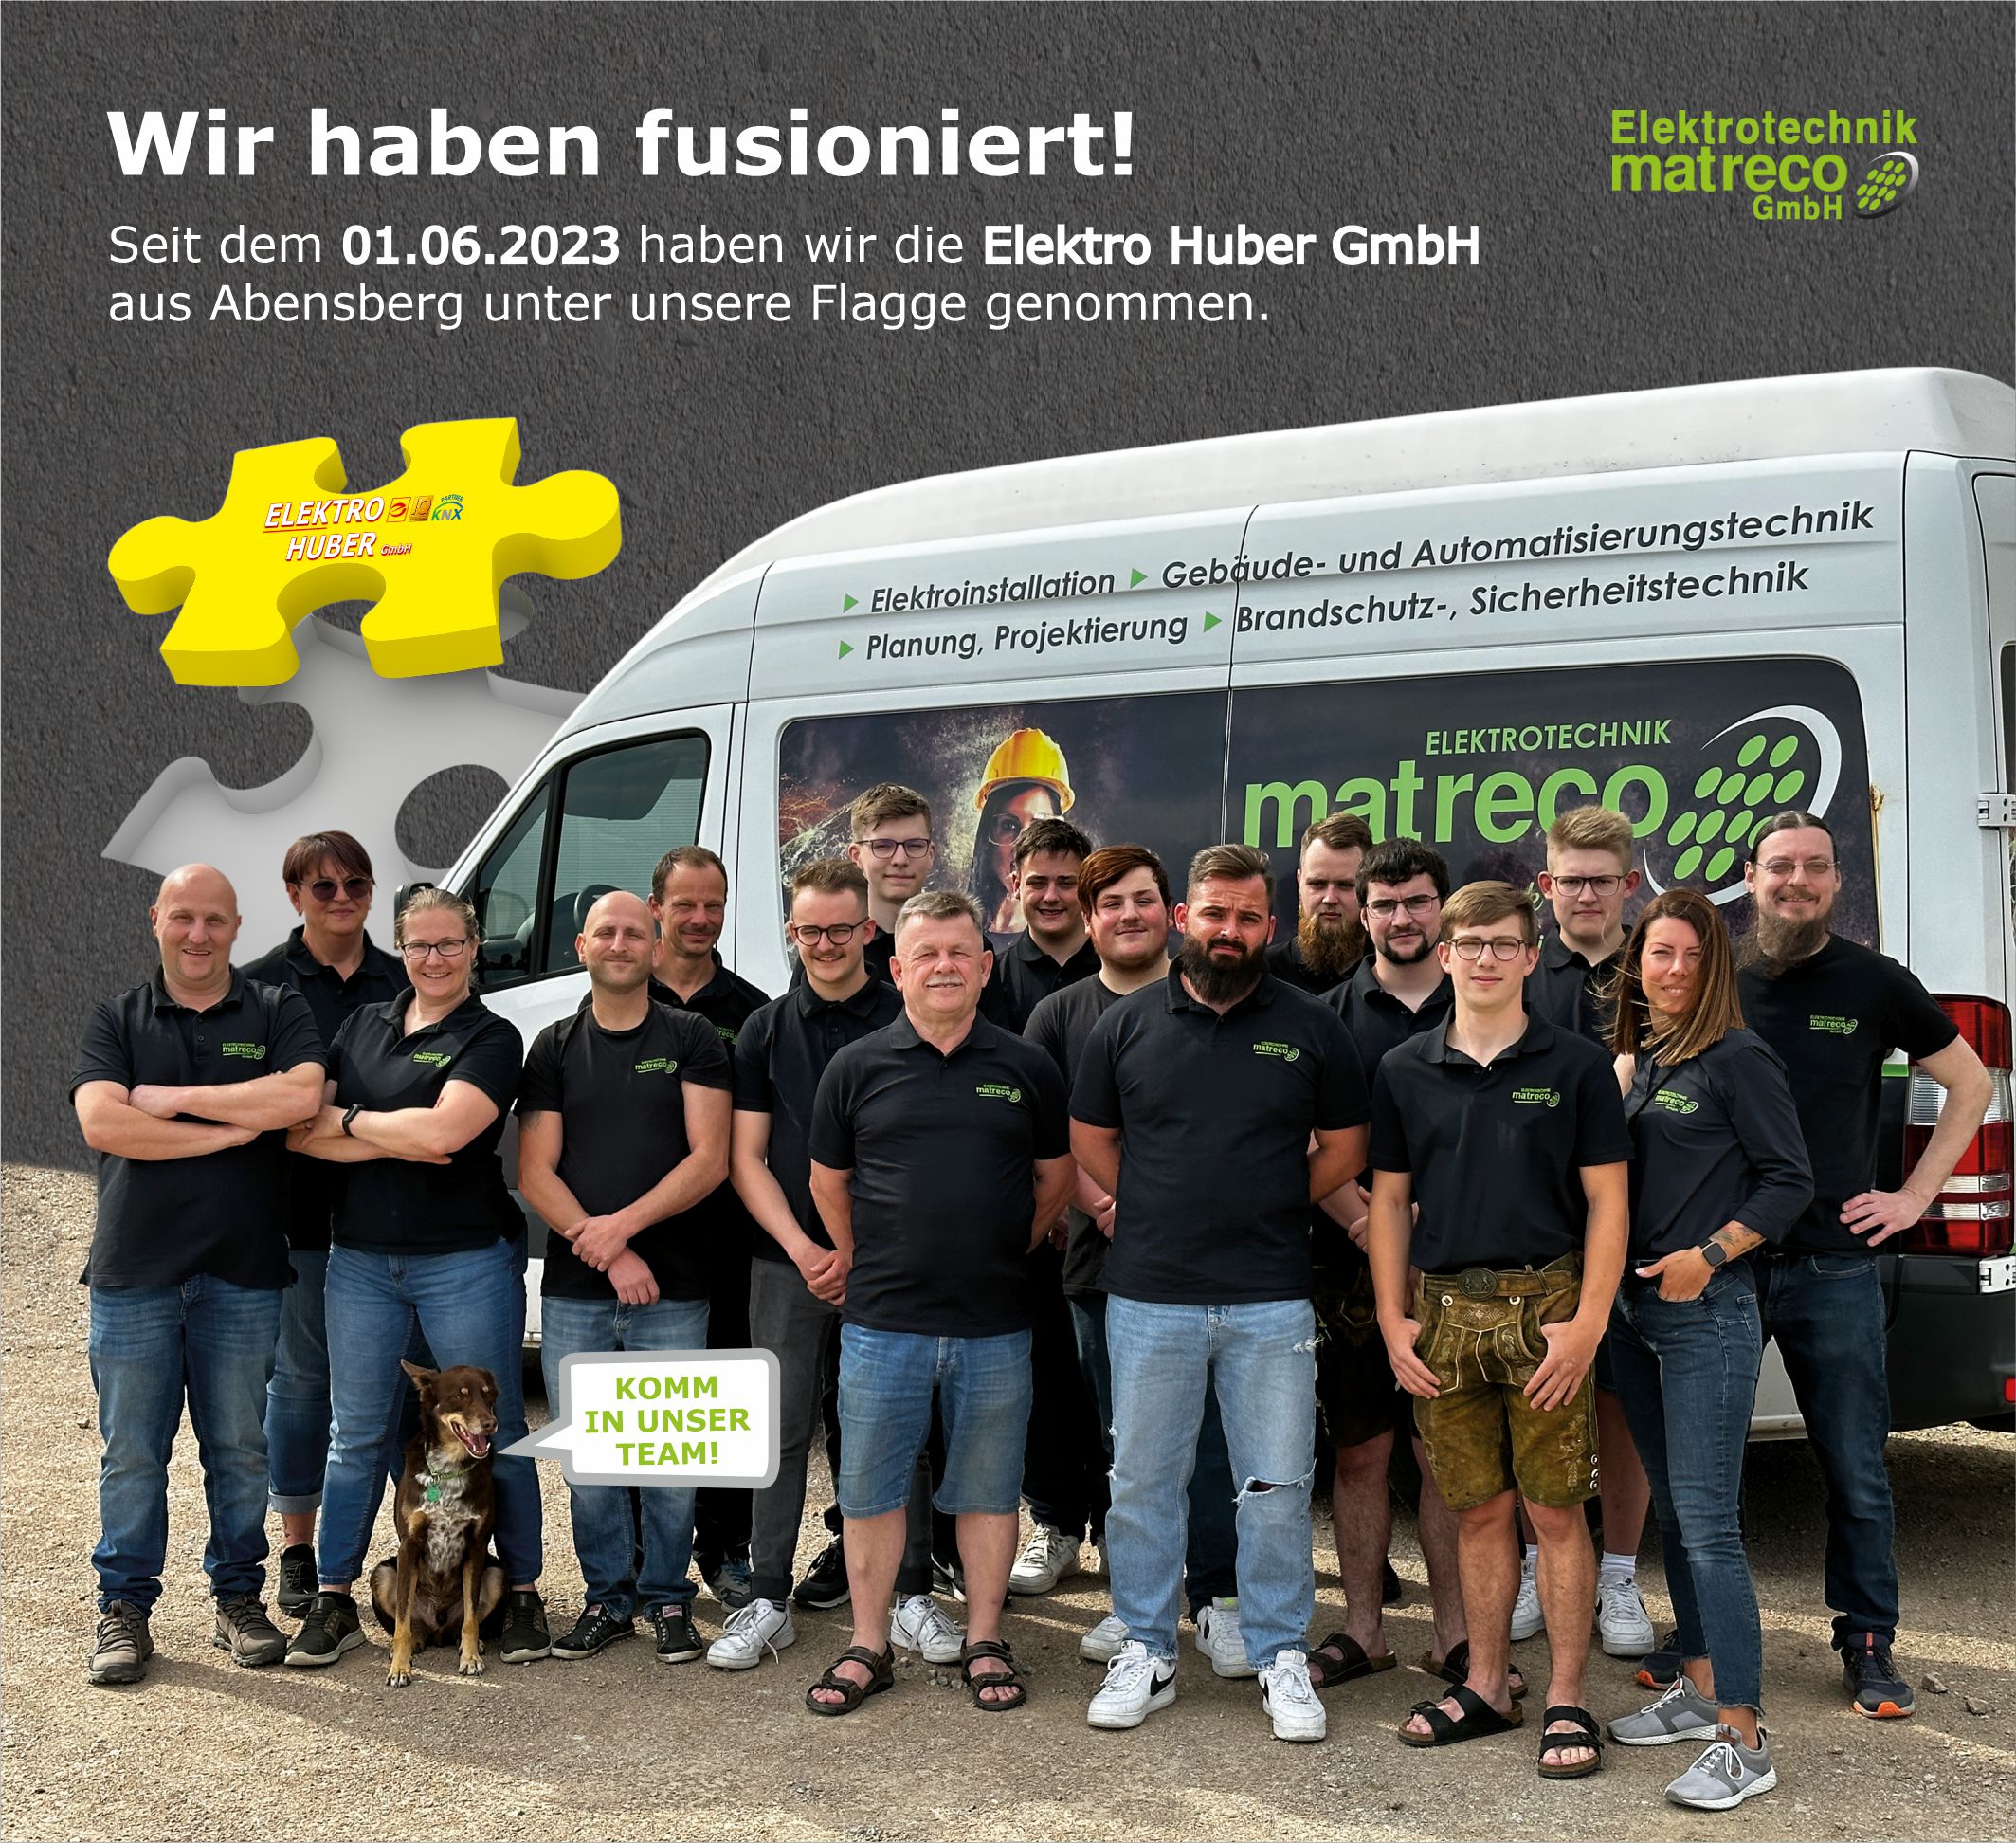 Fusion Elektro Huber GmbH und Matreco GmbH